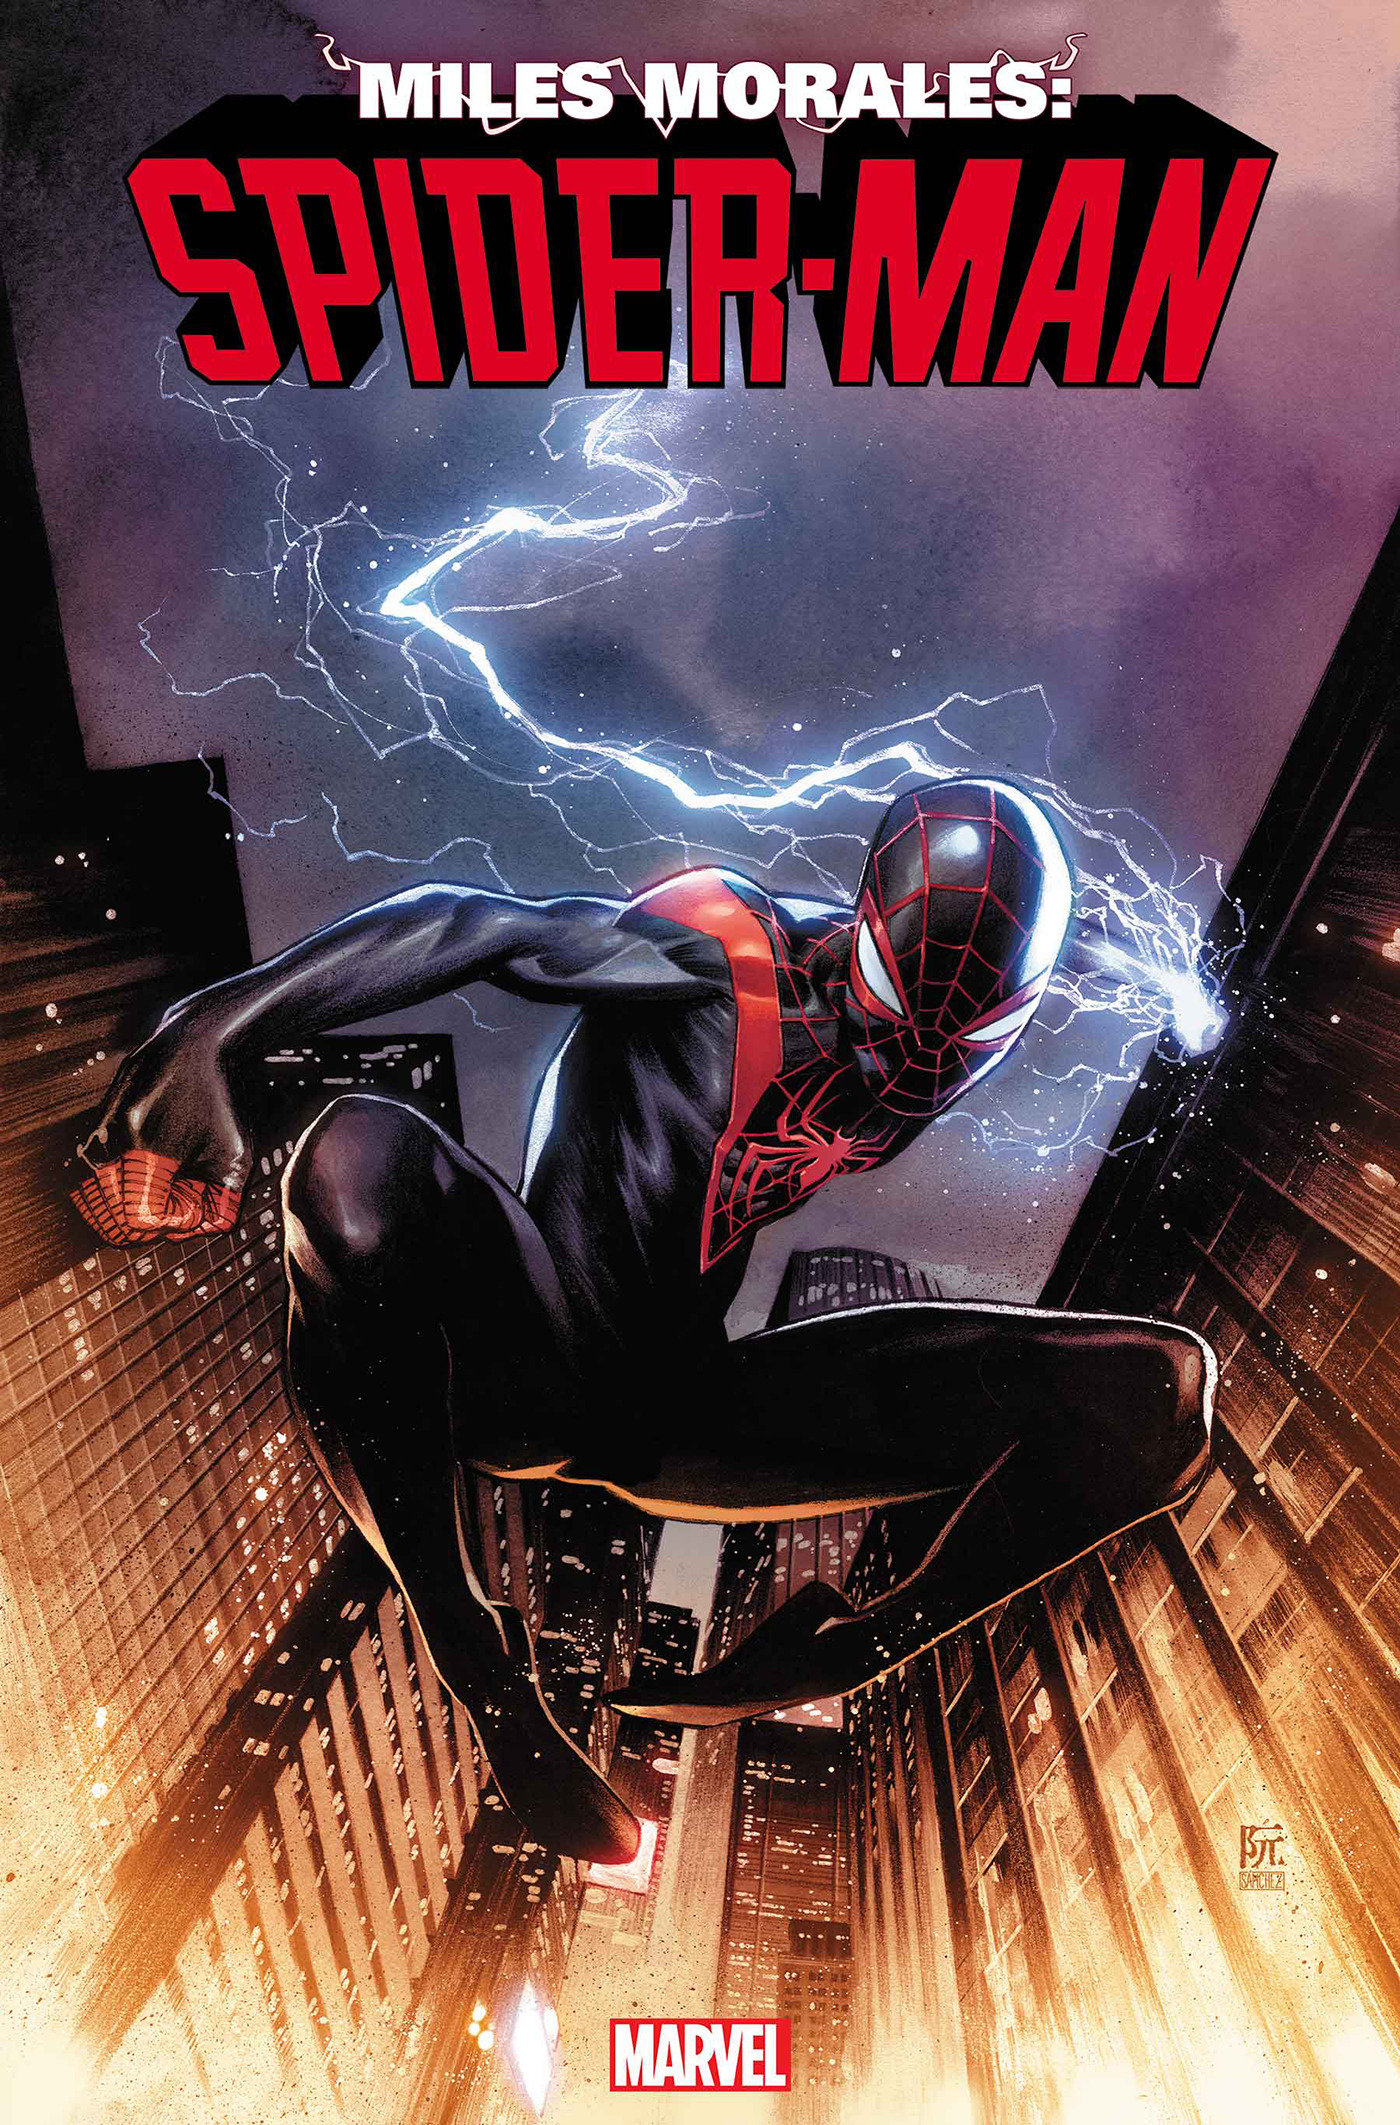 Miles Morales: Spider-Man #1 Poster